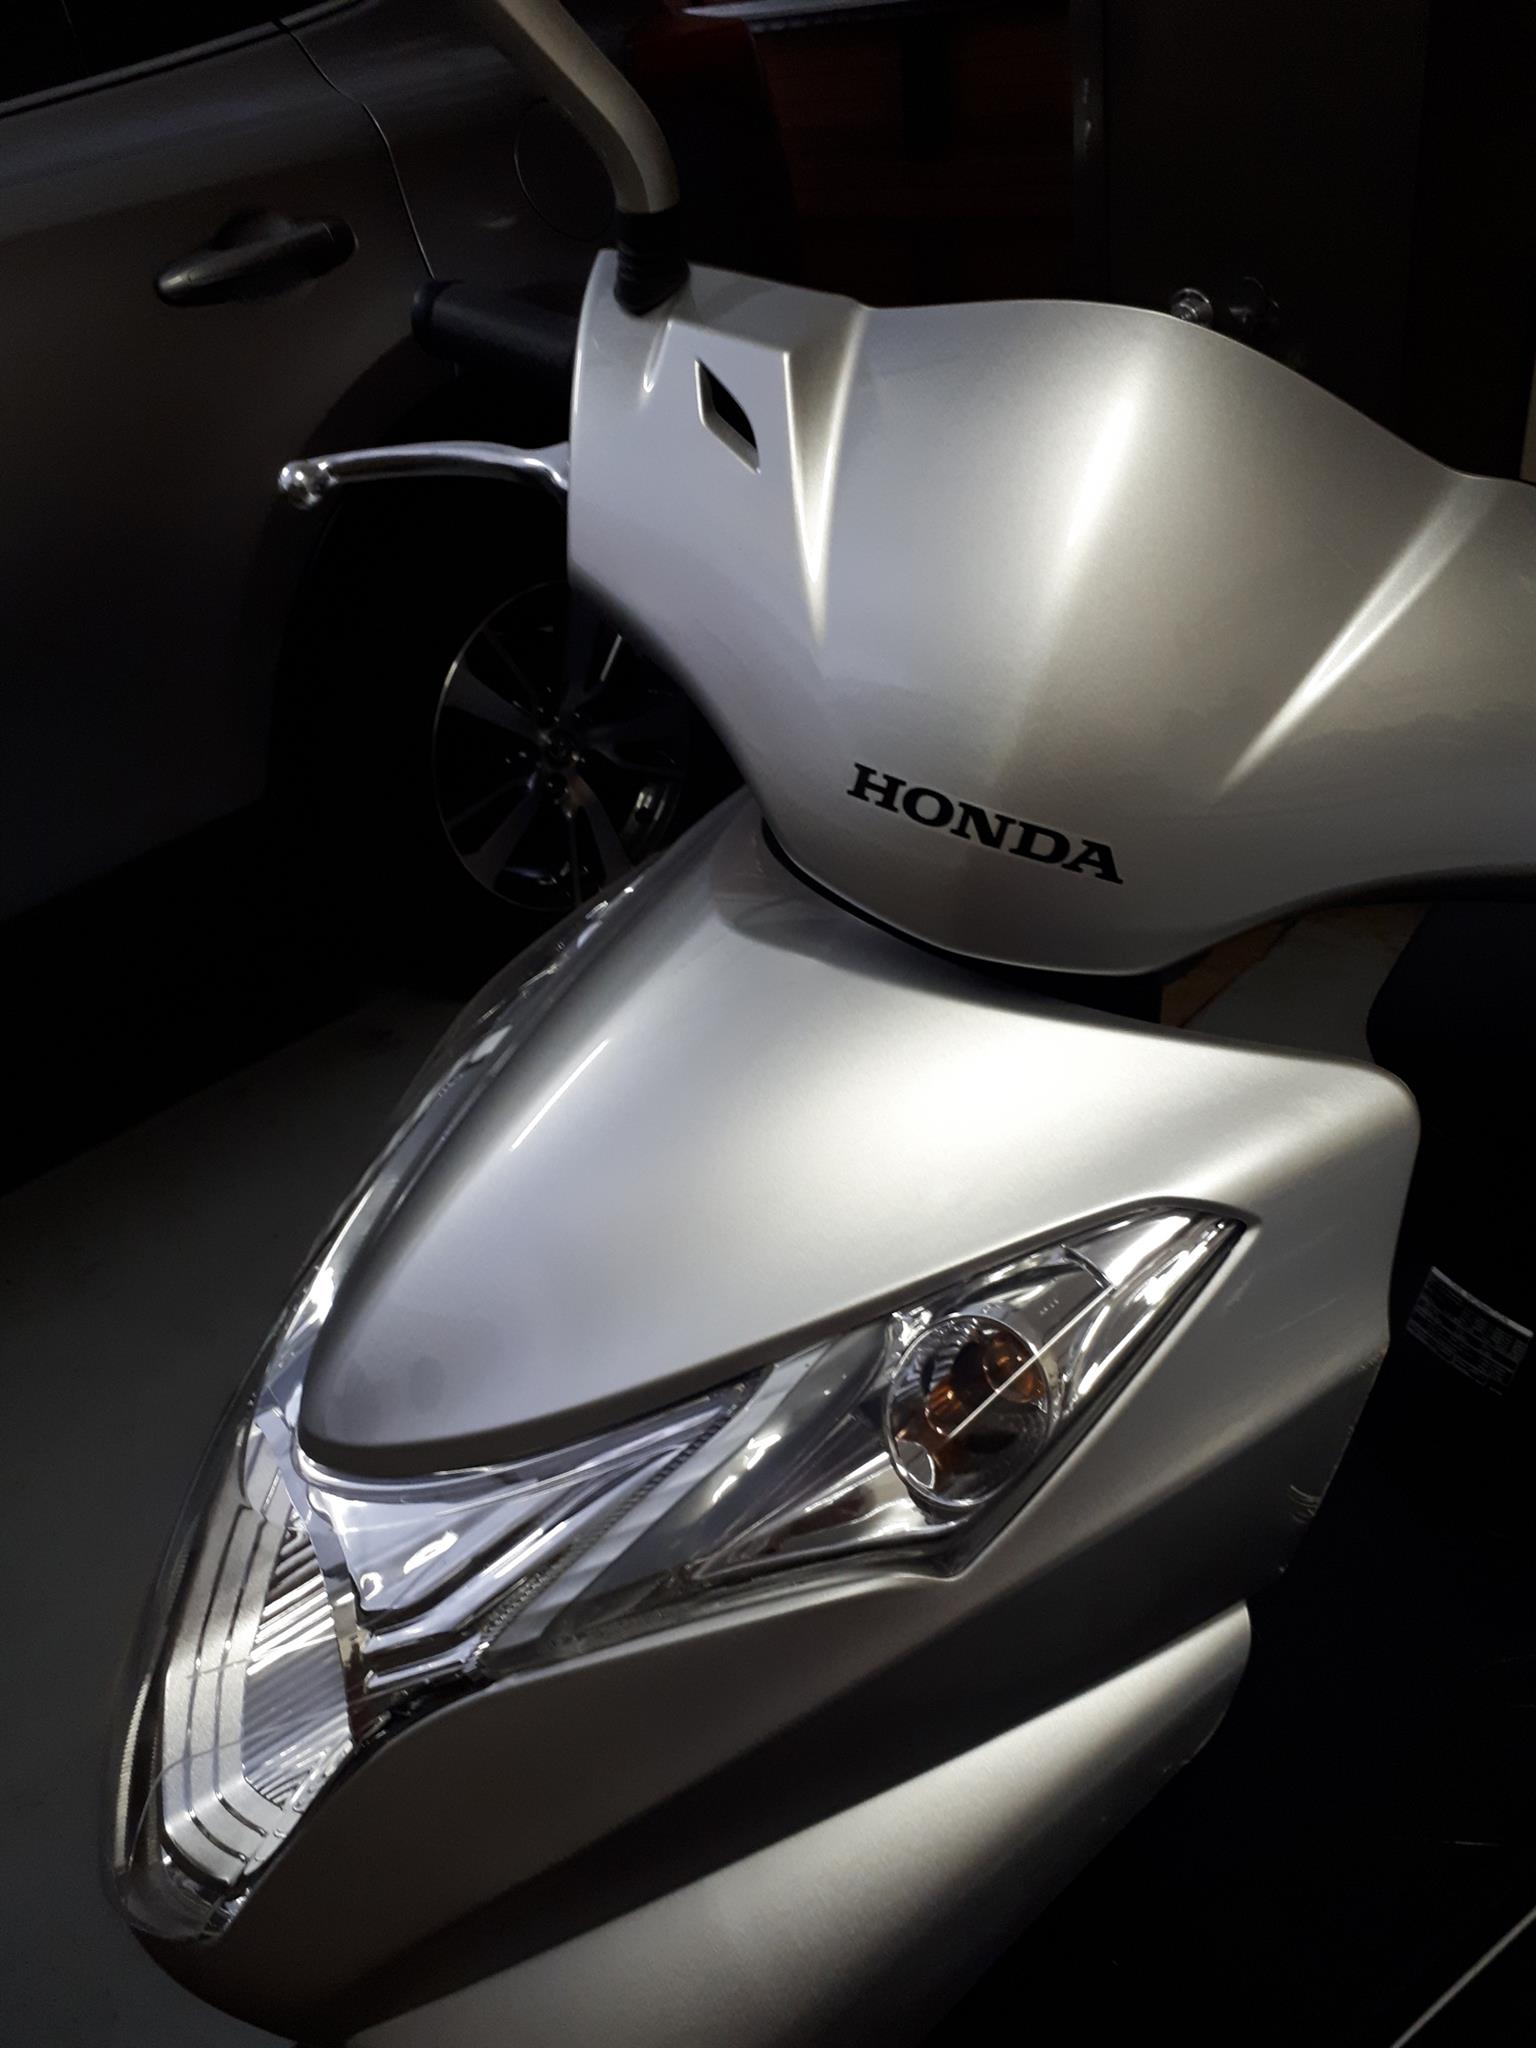 Honda Elite 125cc Scooter for Sale